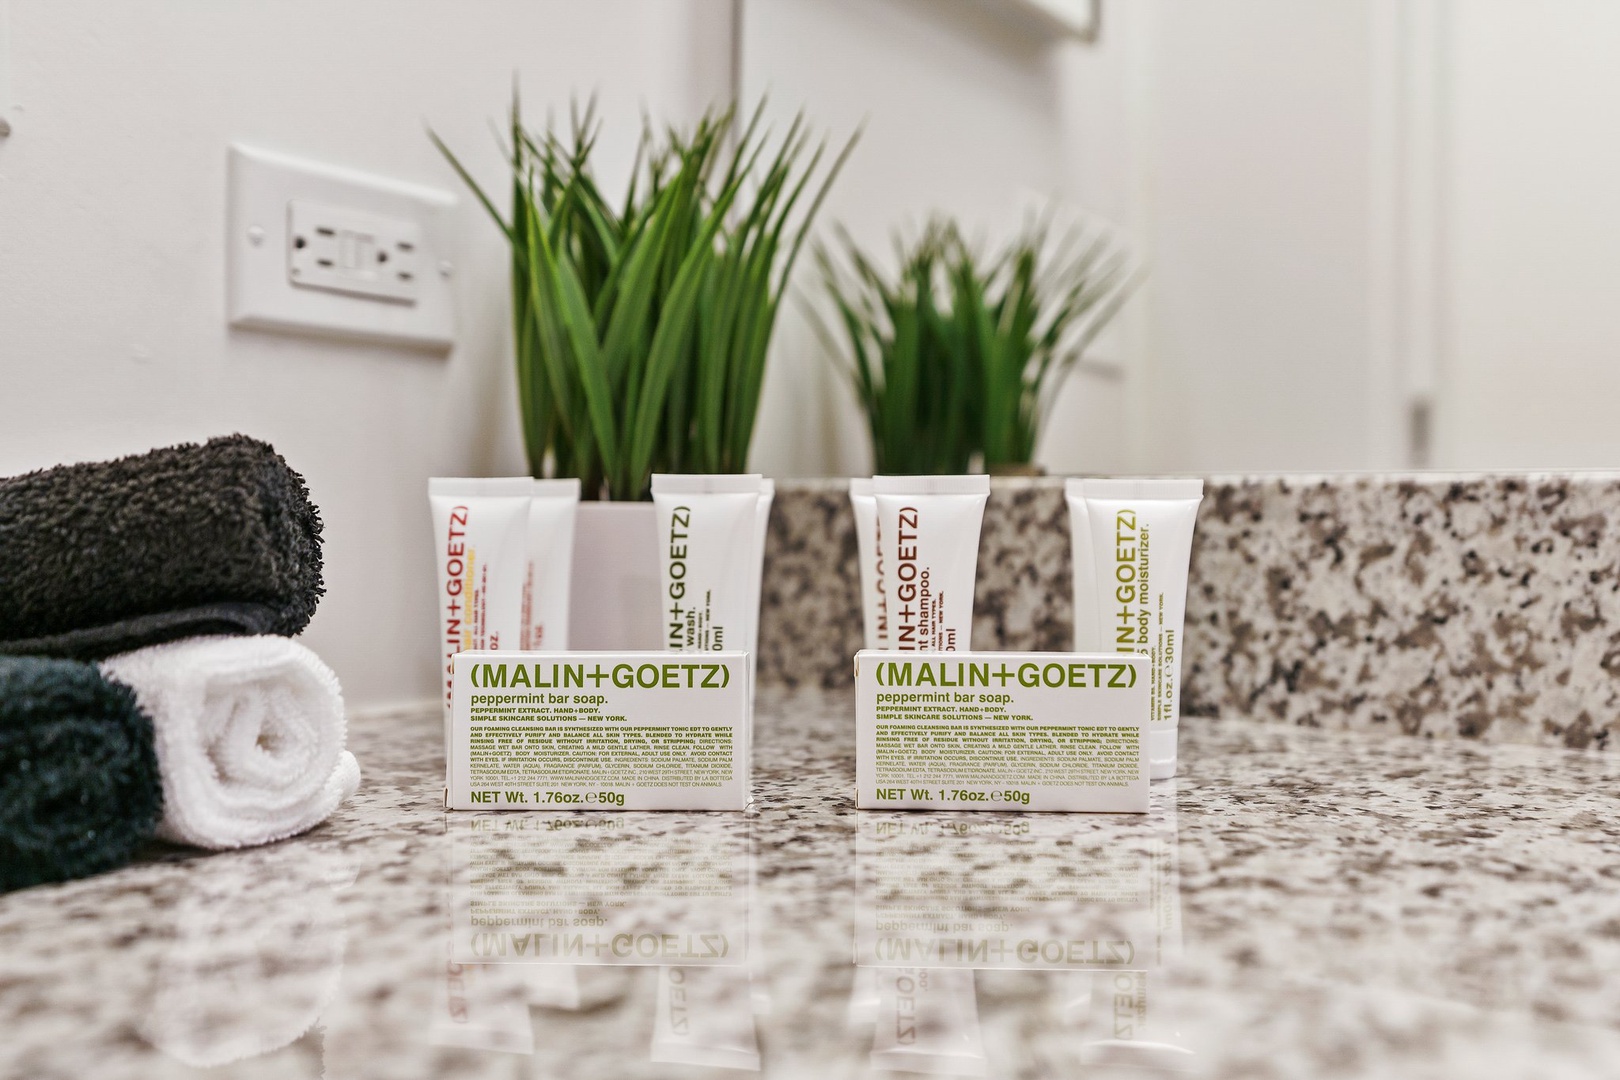 Enjoy complimentary toiletries by Malin + Goetz in the bathroom.